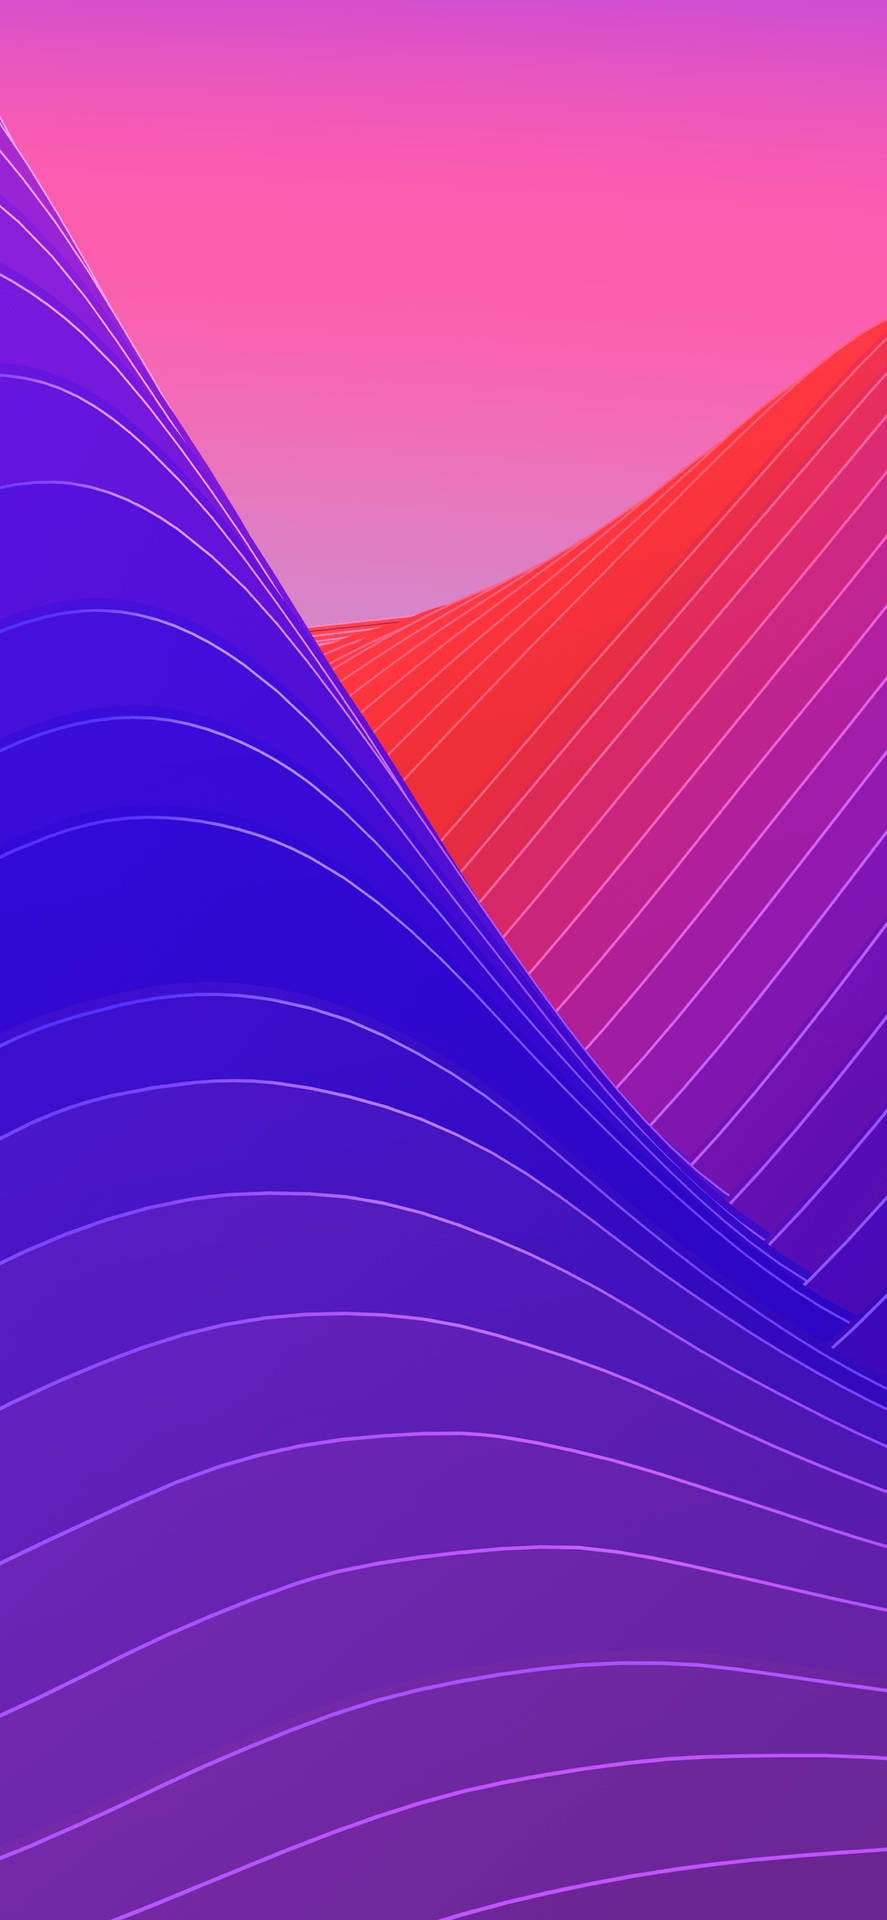 iPhone X Original Abstract Waves Wallpaper